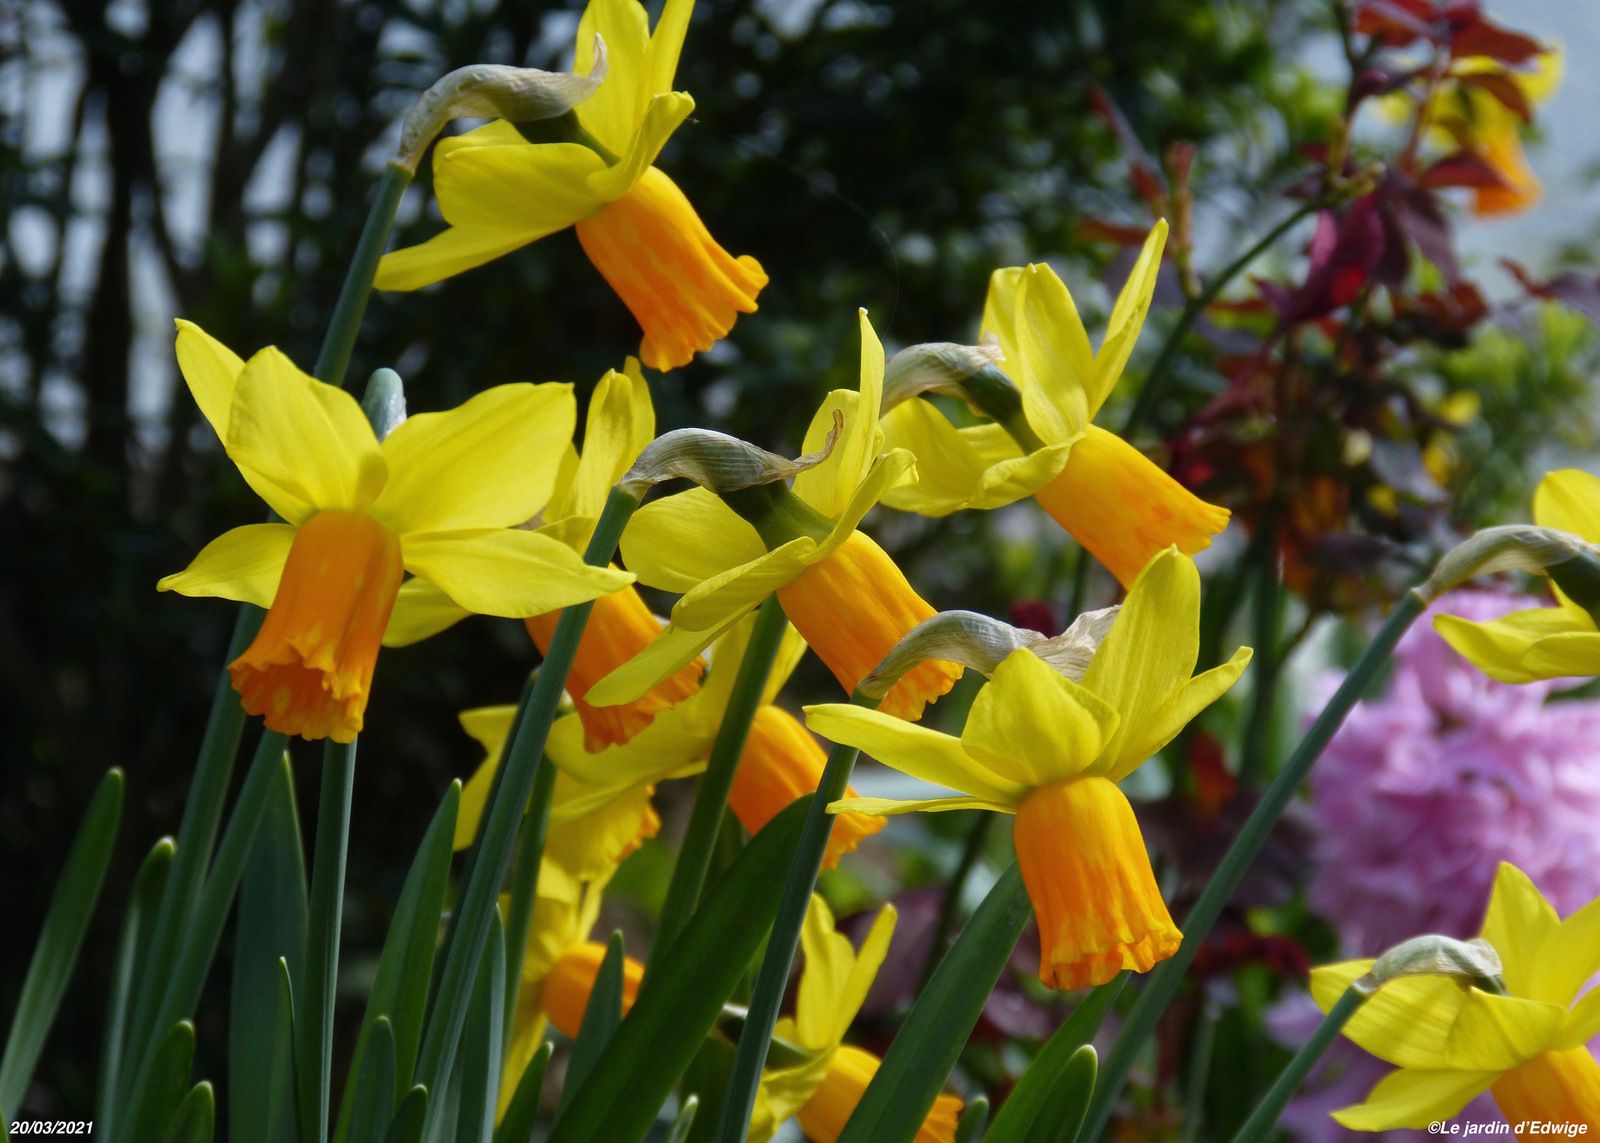 Narcisse cyclamineus 'Jetfire '- Narcissus cyclamineus 'Jetfire' - Le  jardin d'Edwige.